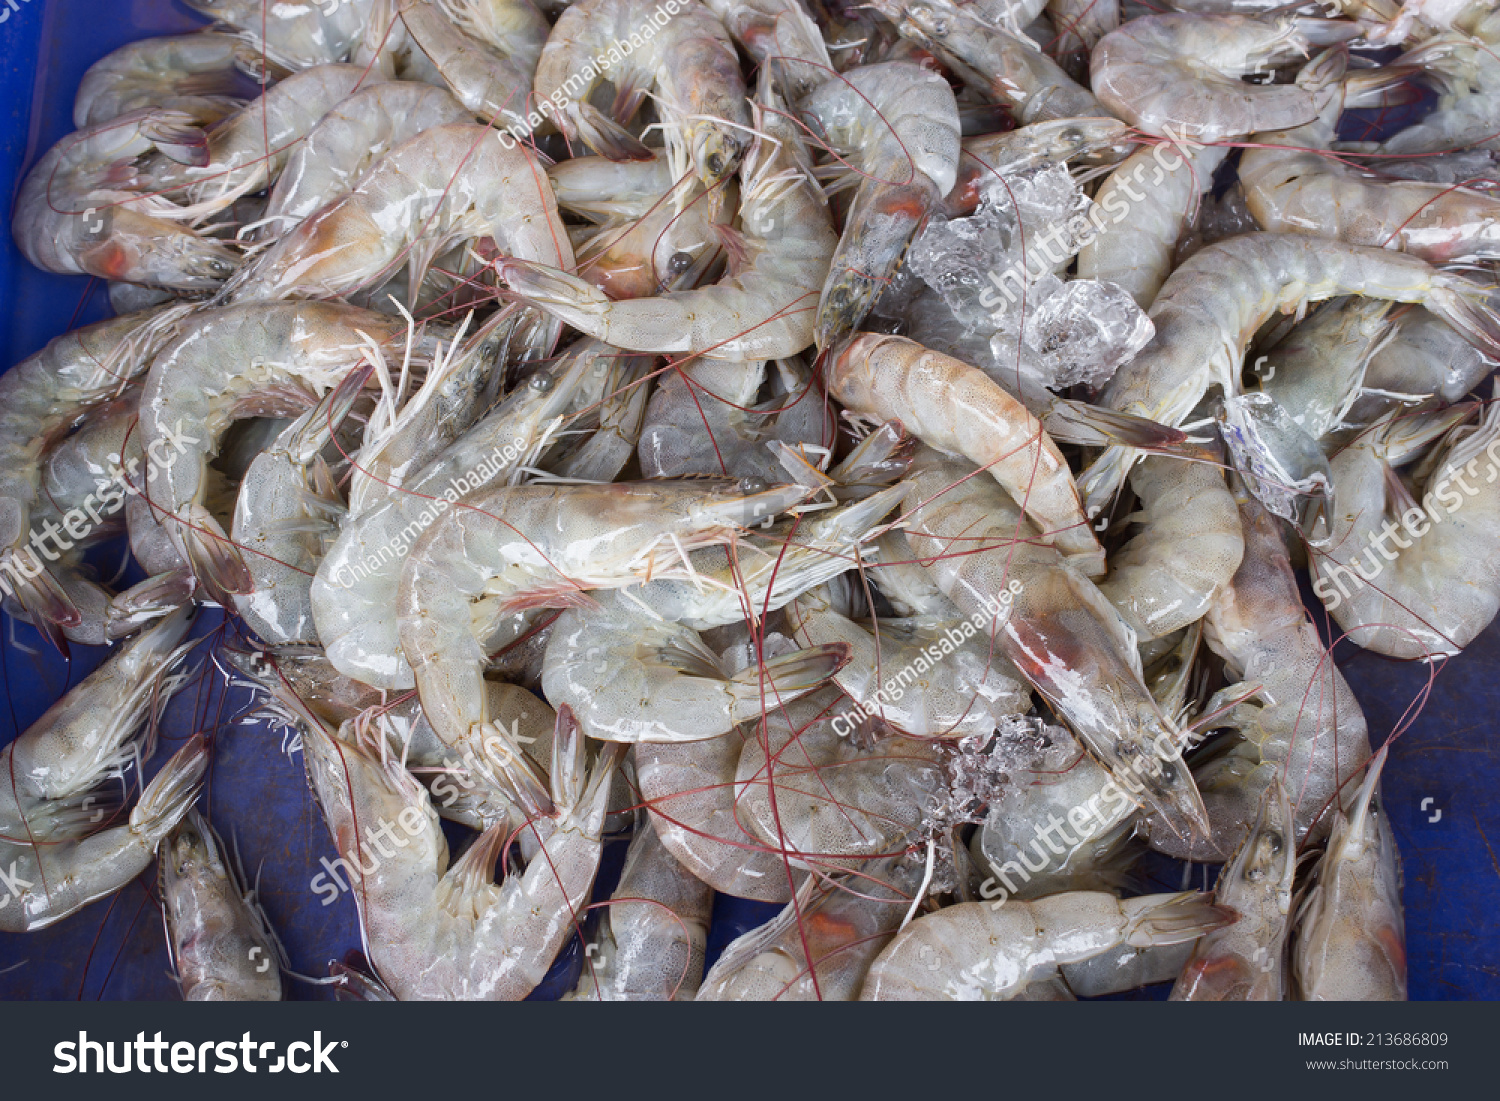 Fresh Shrimps Prawns At Fish Market Stock Photo 213686809 Shutterstock